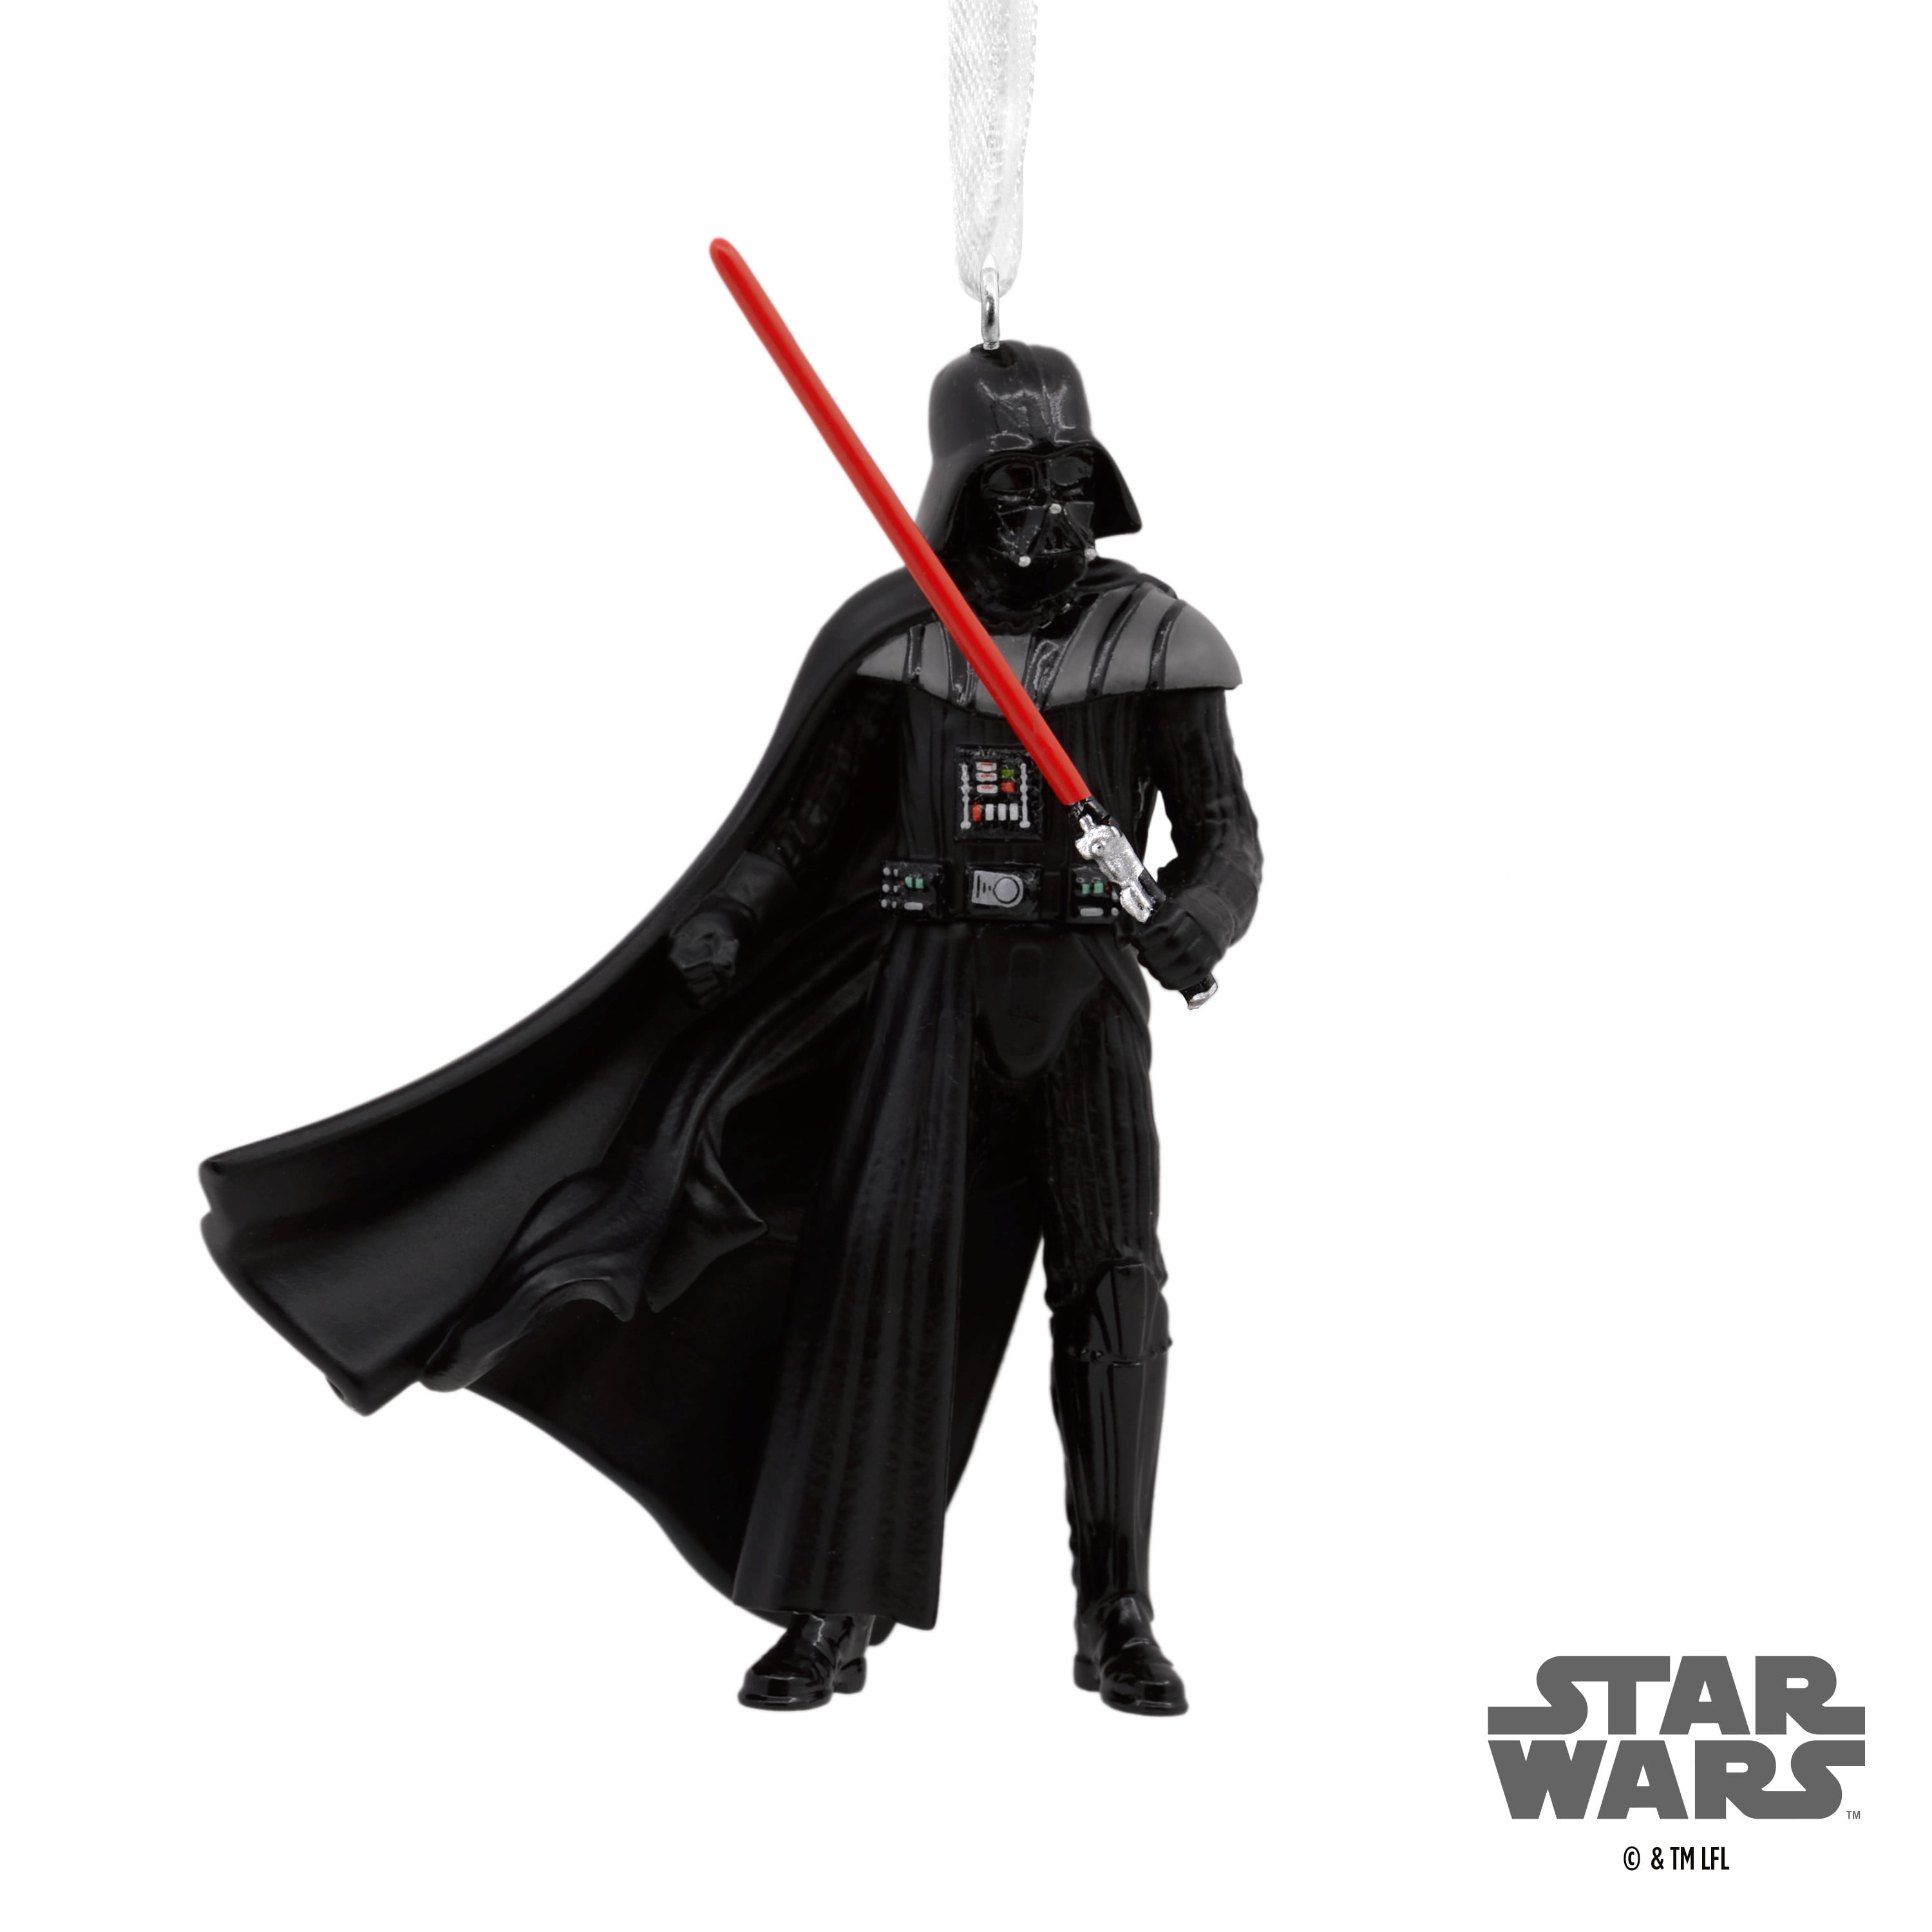 Hallmark Christmas Ornaments Star Wars Darth Vader With Lightsaber Decoupage 